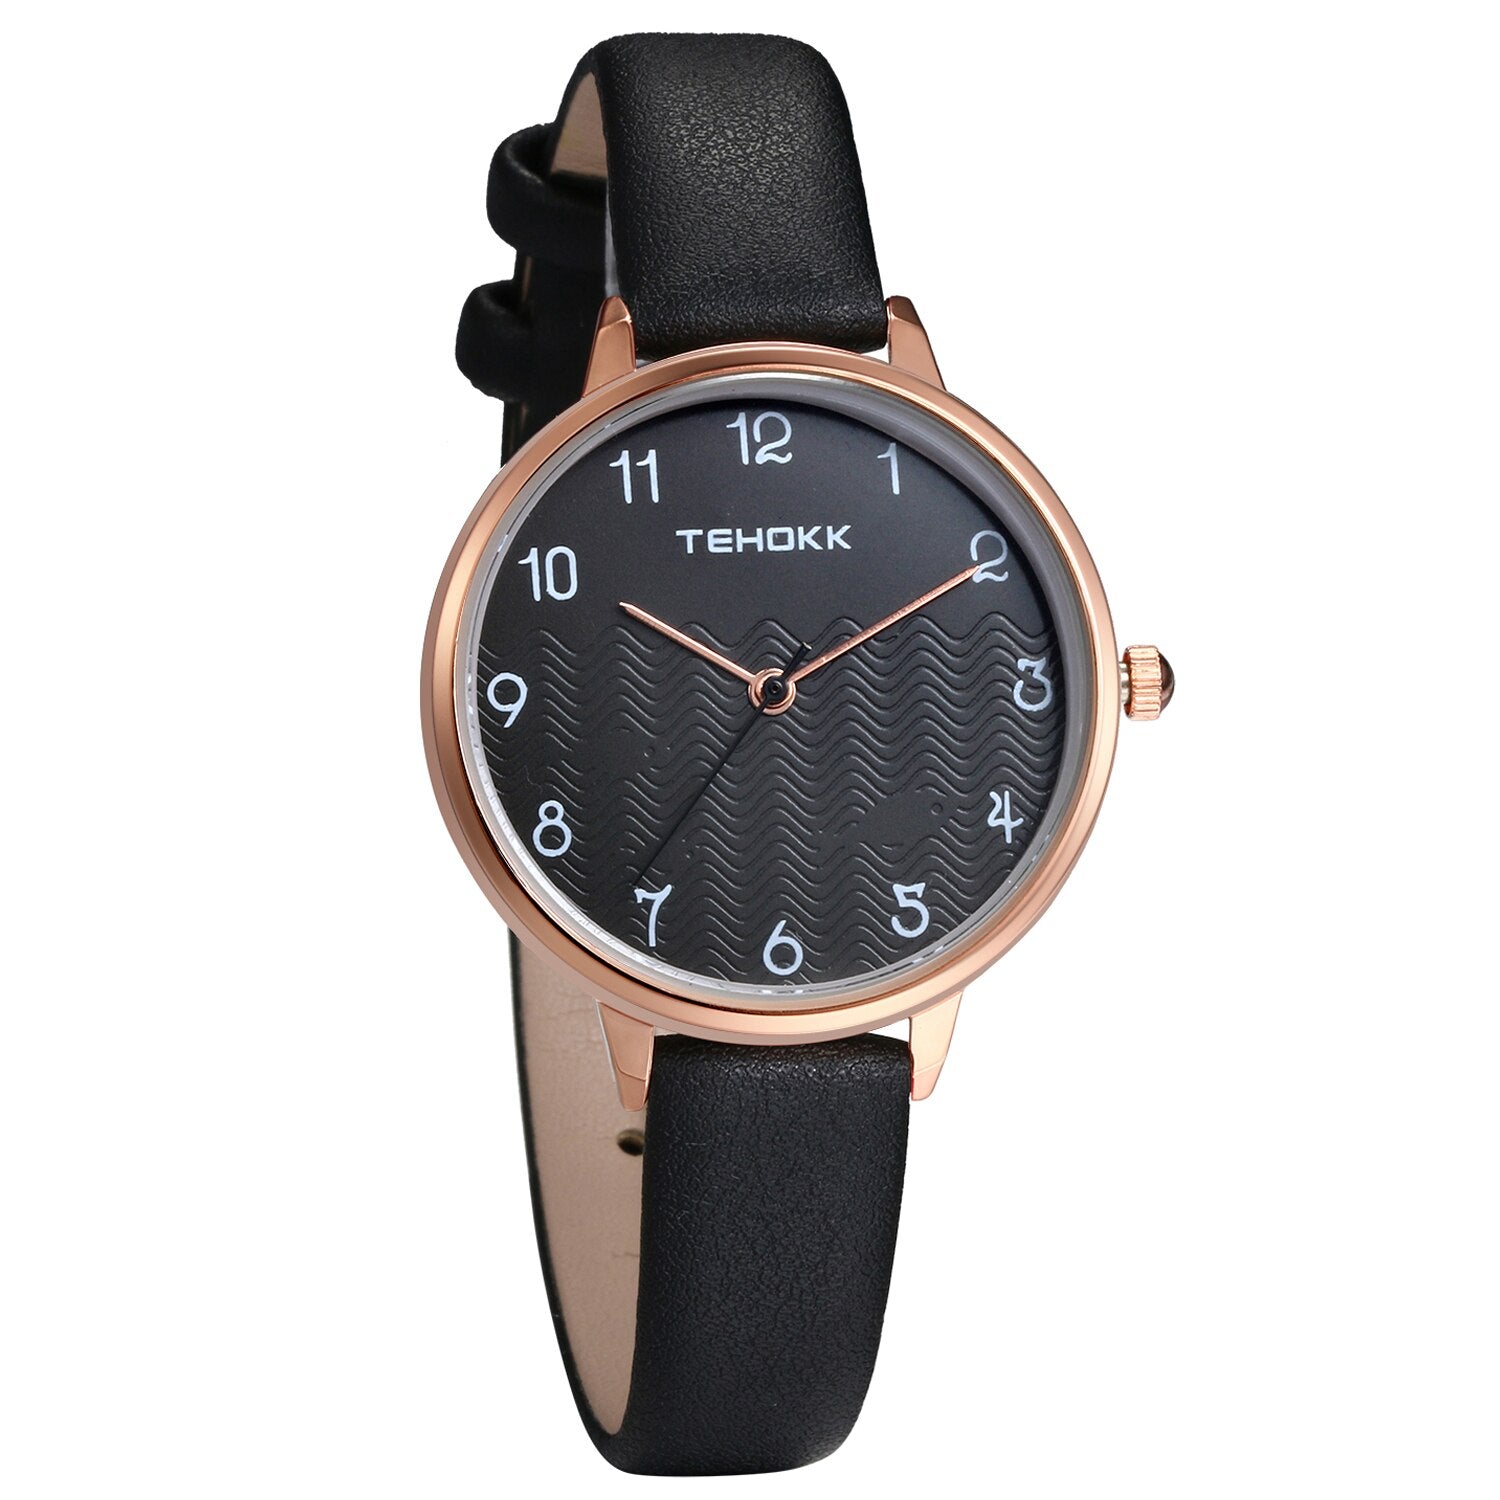 Lancardo 2020 New Simple Fashion Women Watches Elegant Dial Luxury Analog Quartz Female  Red Black White Wristwatch Reloj Mujer